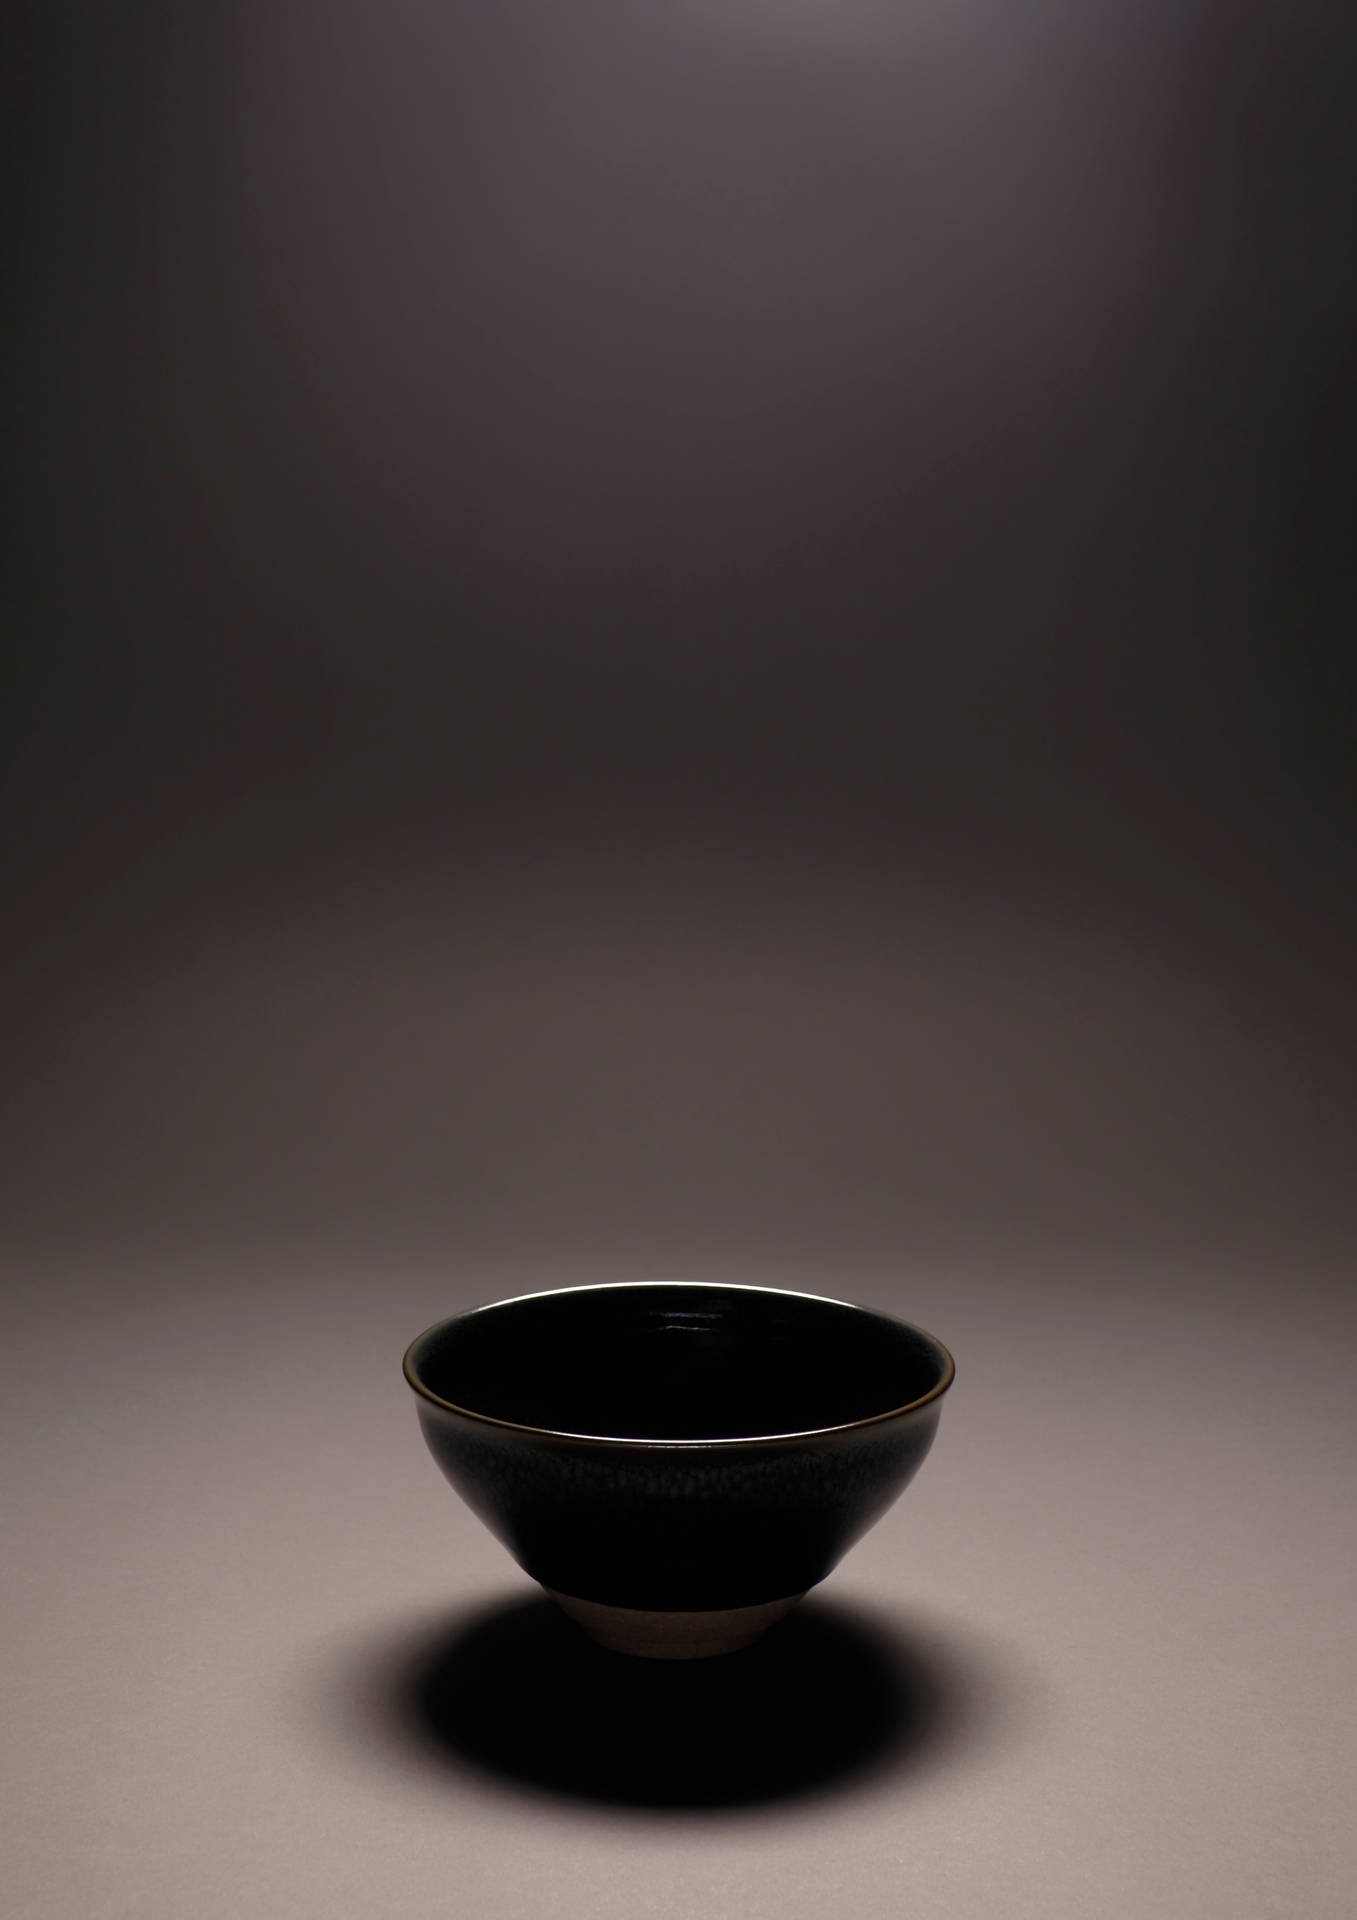 Artistic Black Bowl Silhouette